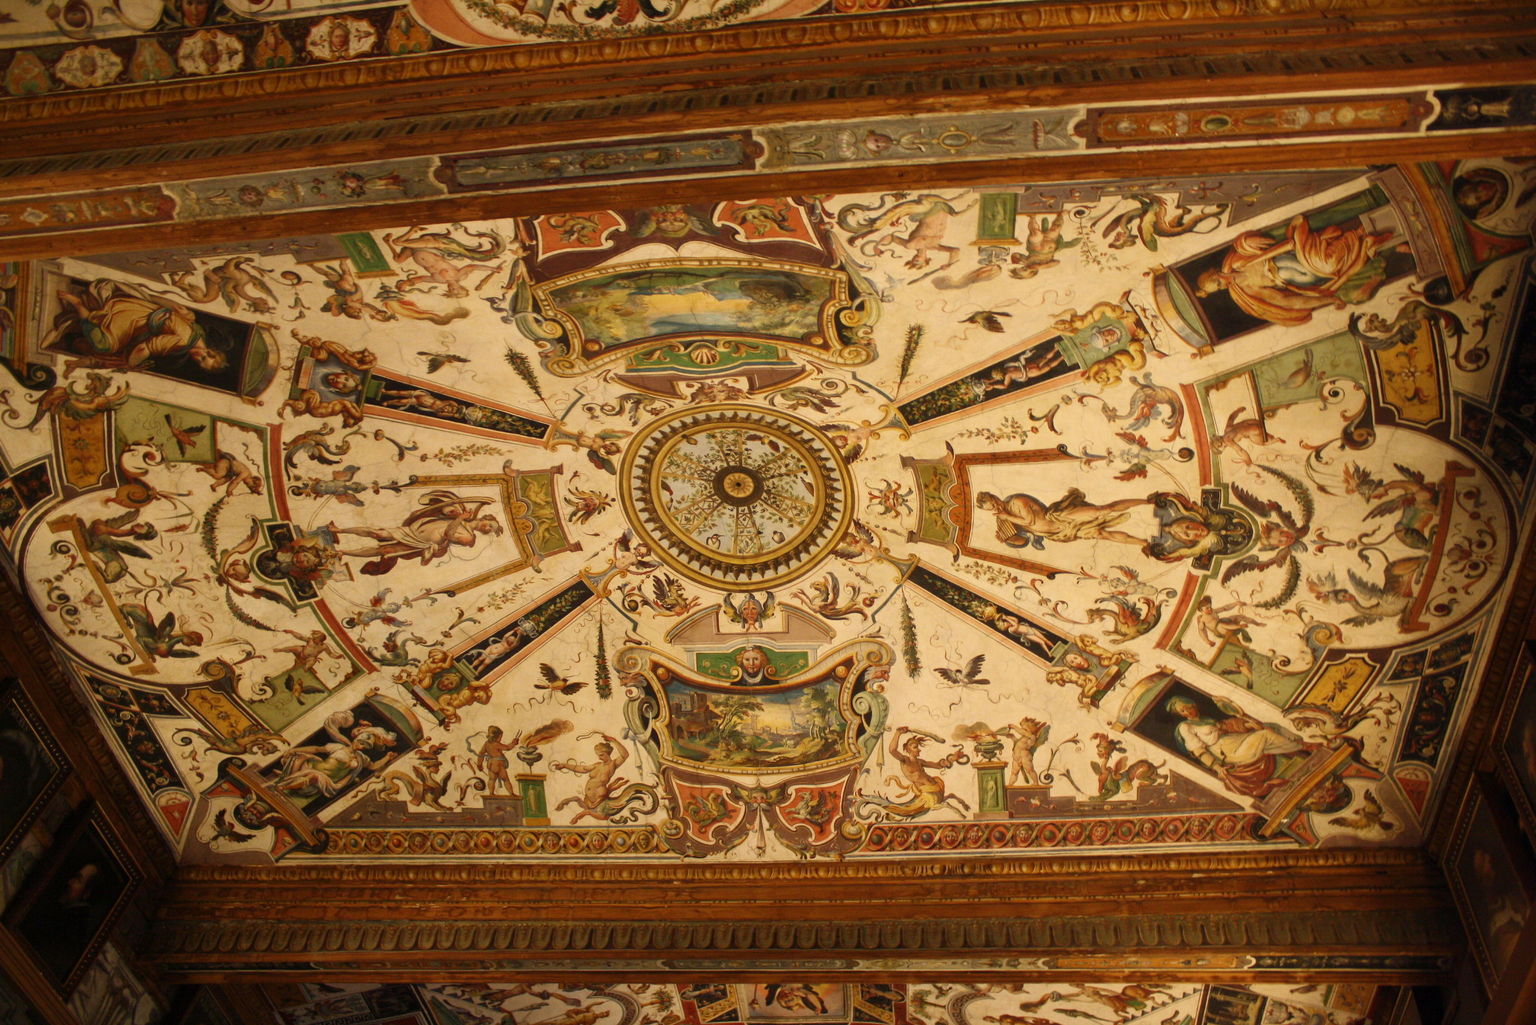 Ceiling inside Ufffizi Gallery